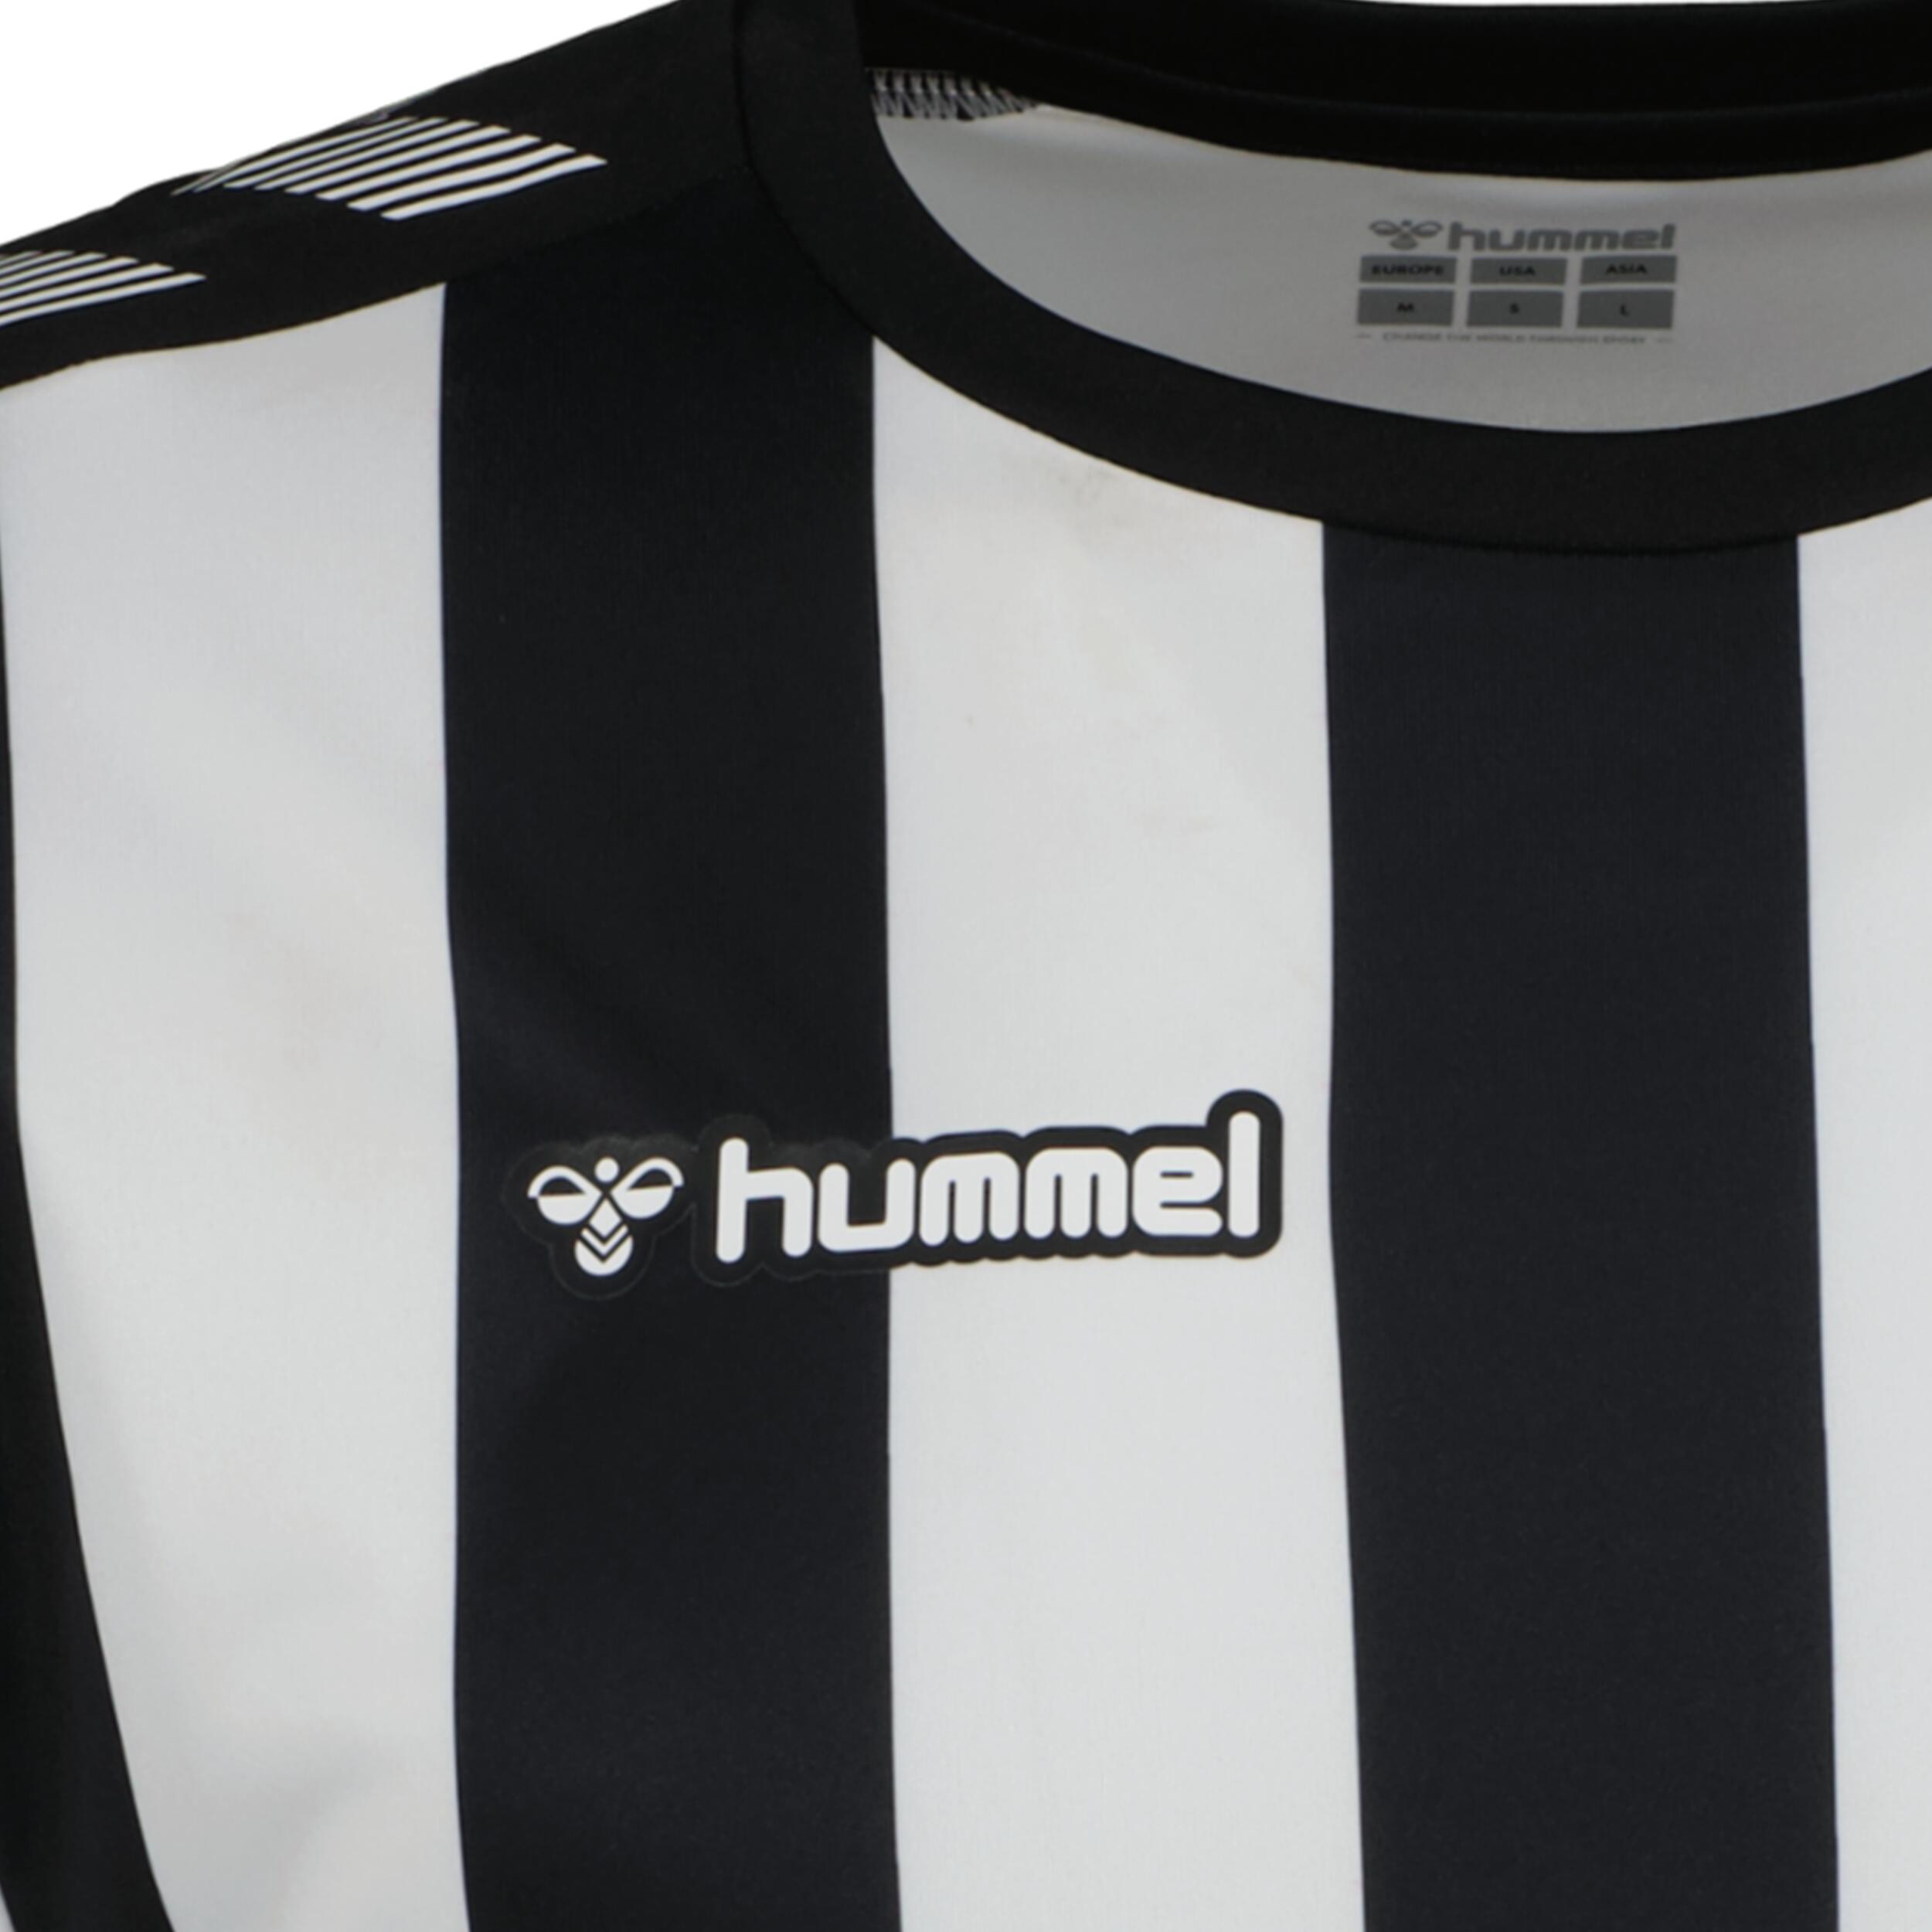 Stripe jersey for men, great for football,  in black/white 3/3